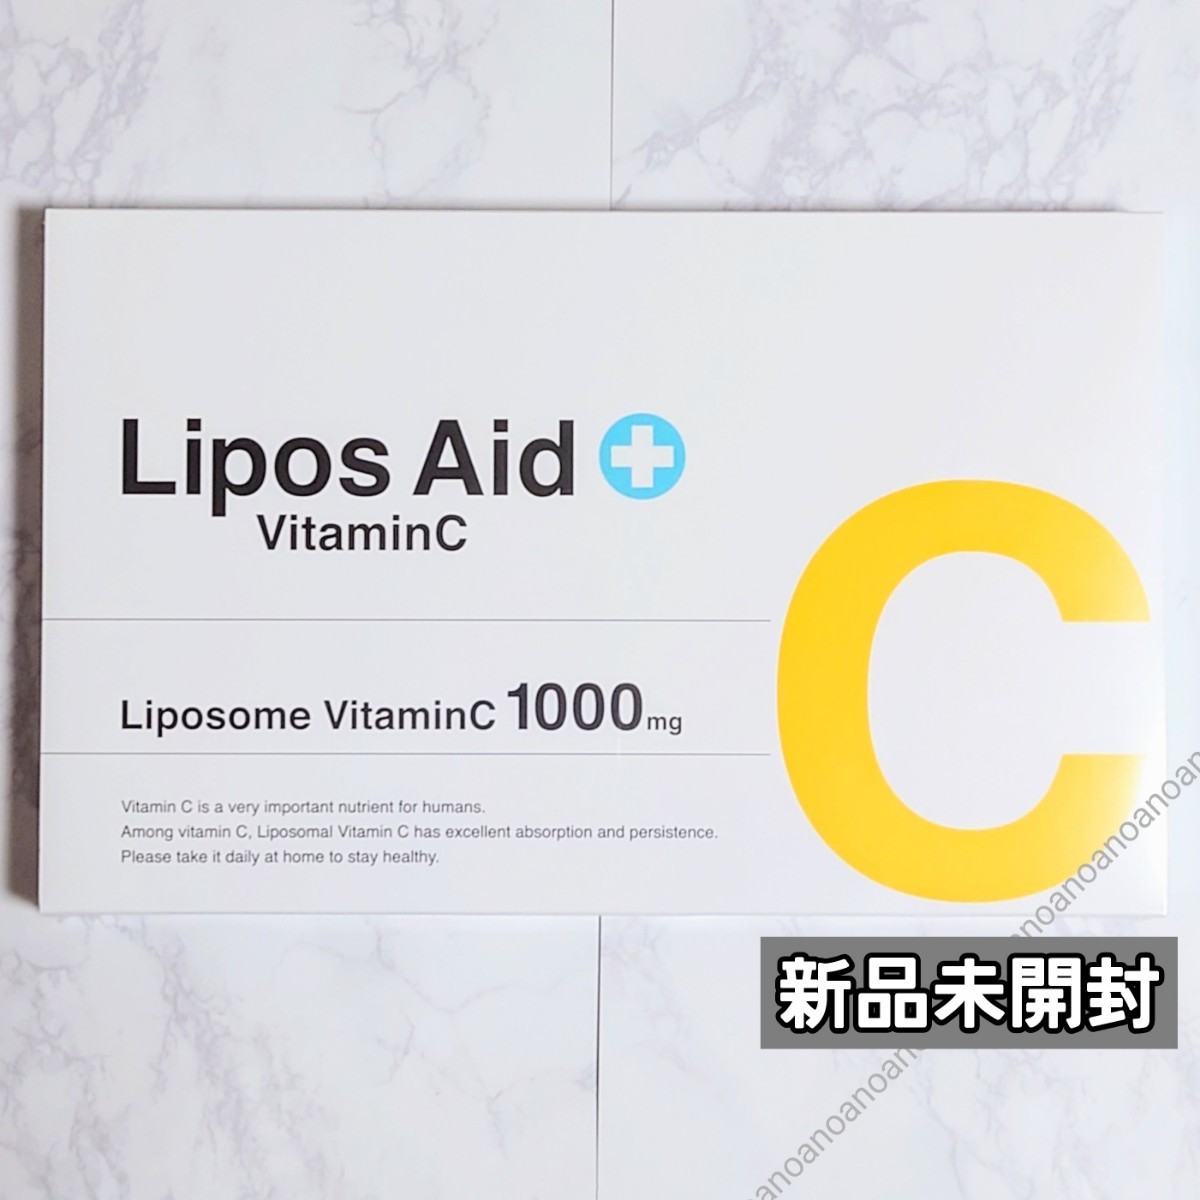 Lipos Aid Витамин C Lipos Aid VC Beauty Dablement Усталость восстановить внутреннюю помощь 1 месяц для 1 -месячного липосома витамин липосомы.